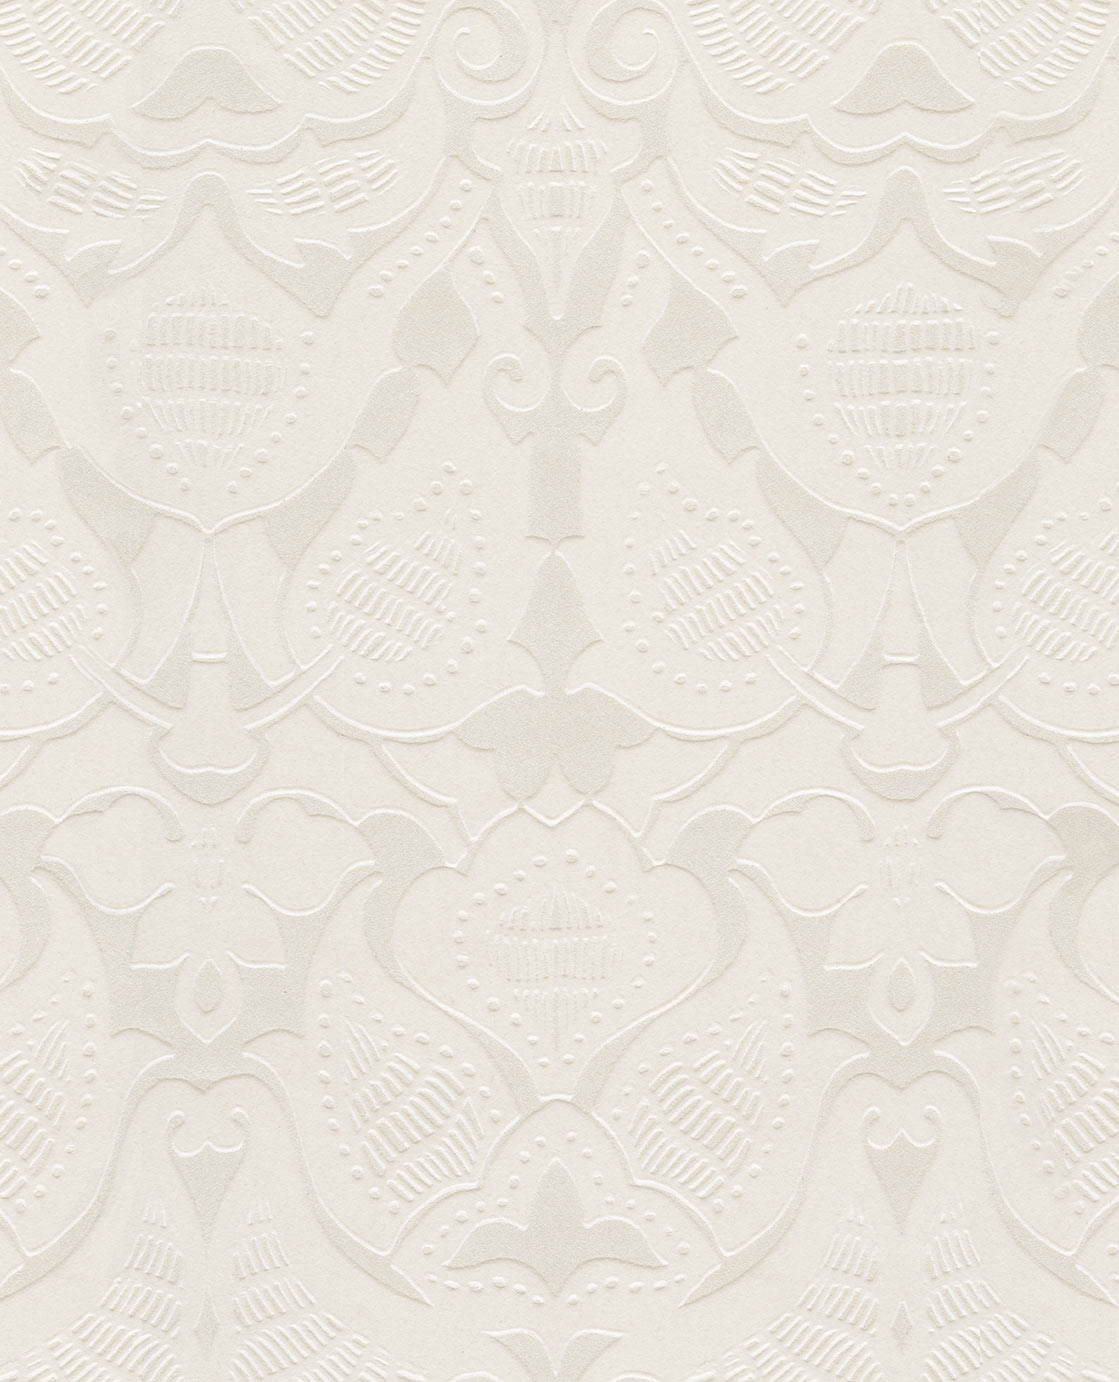 Lounge Ornamental Flock wallpaper